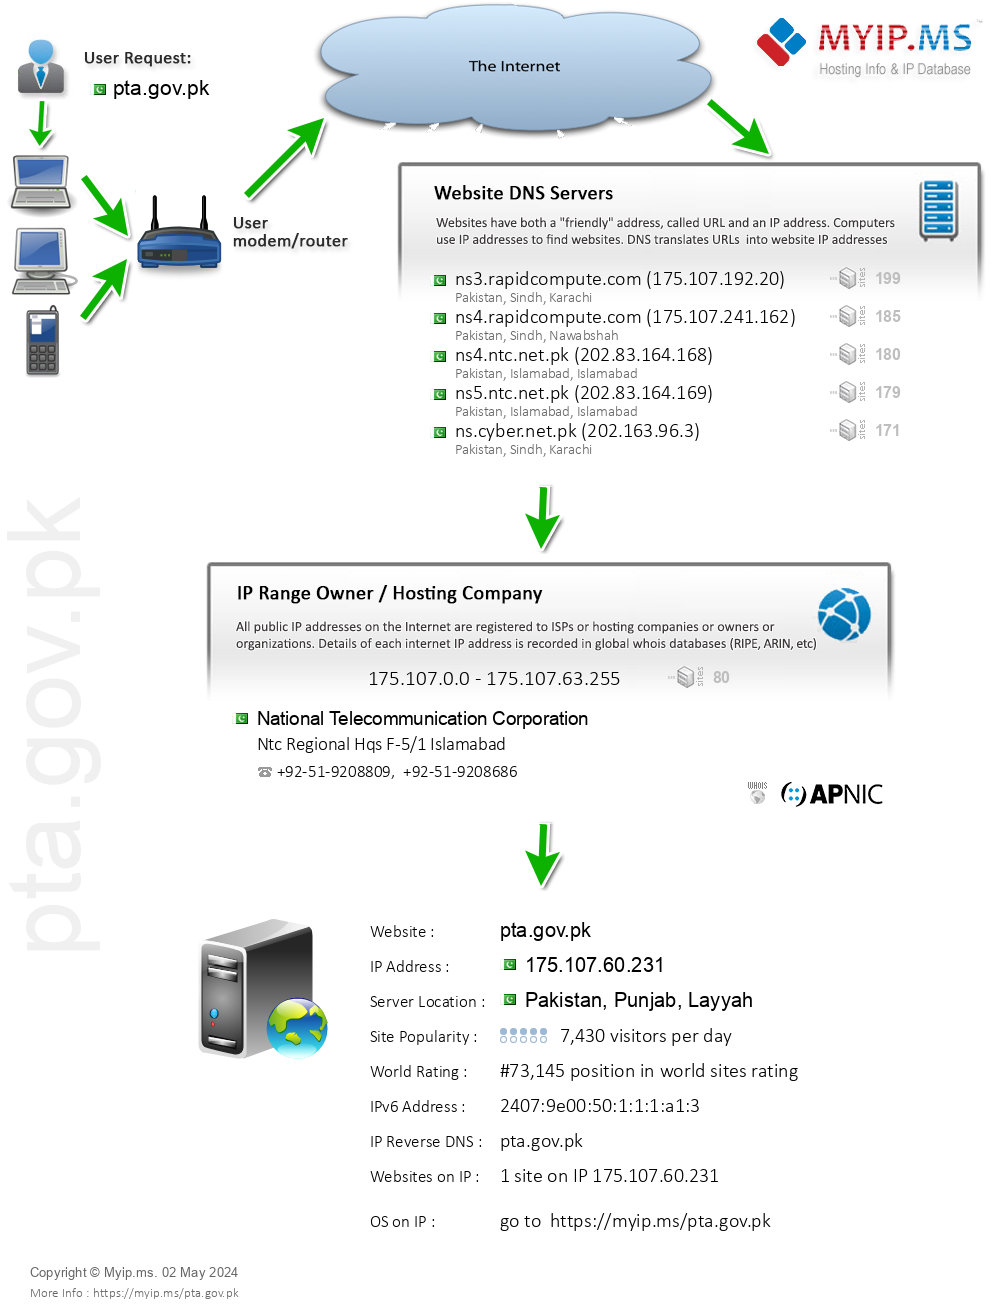 Pta.gov.pk - Website Hosting Visual IP Diagram